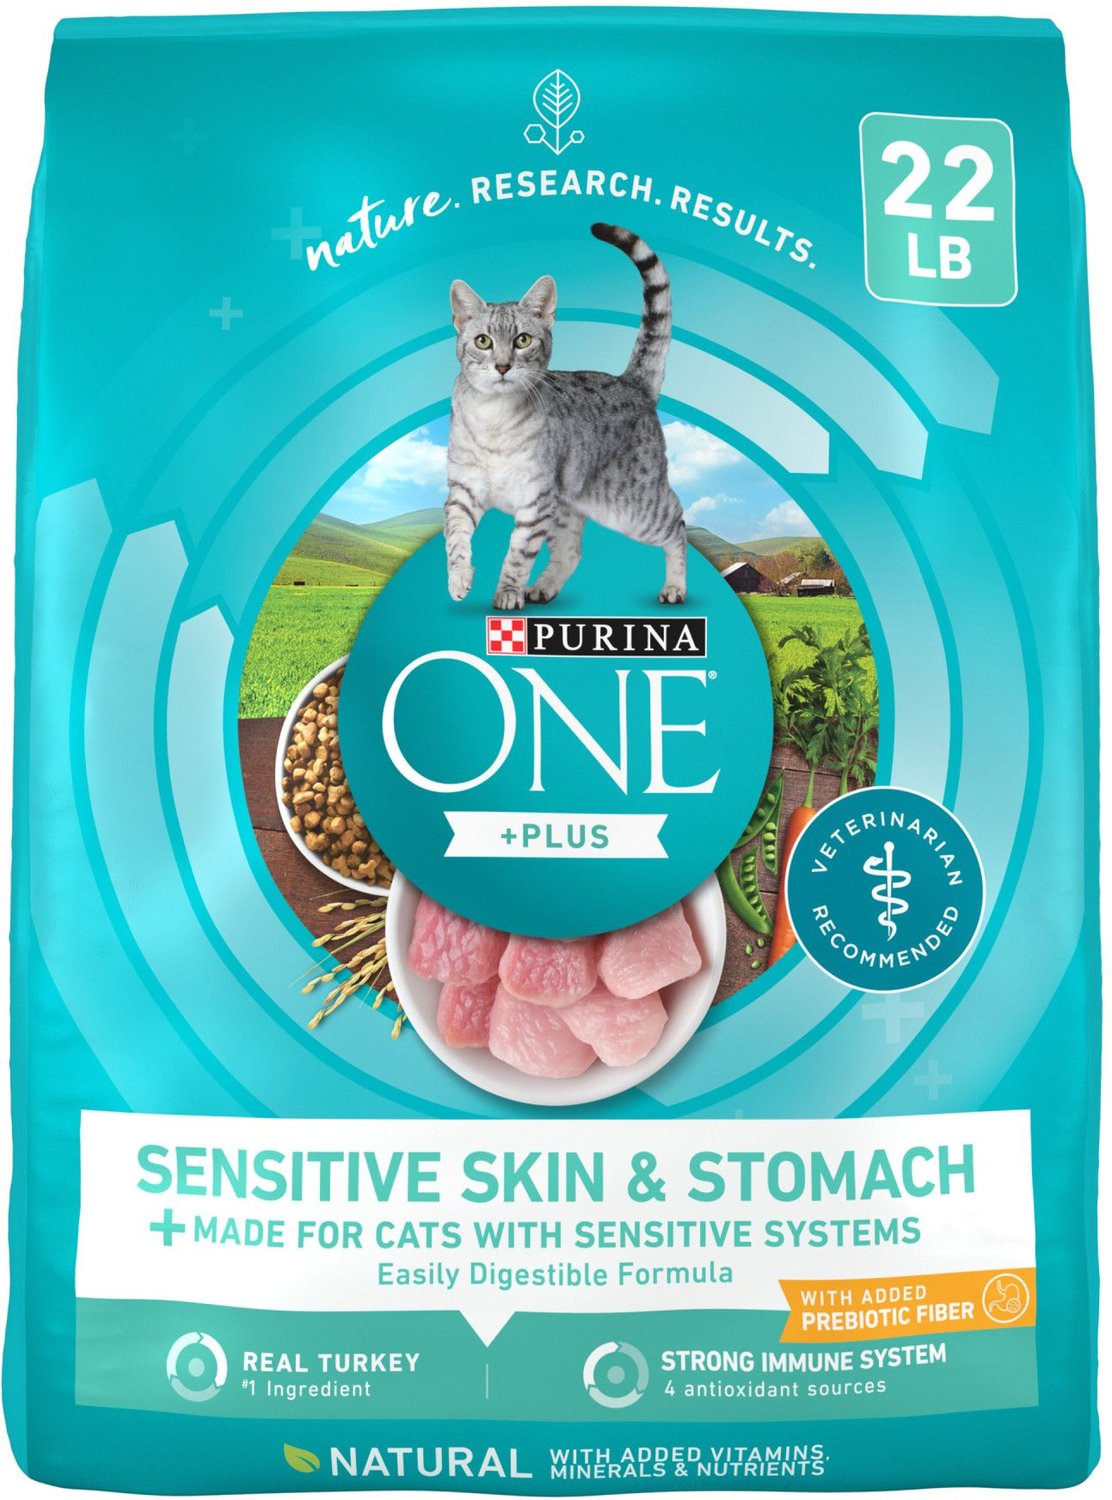 Purina ONE Sensitive Skin & Stomach Dry Cat Food, 22lb bag